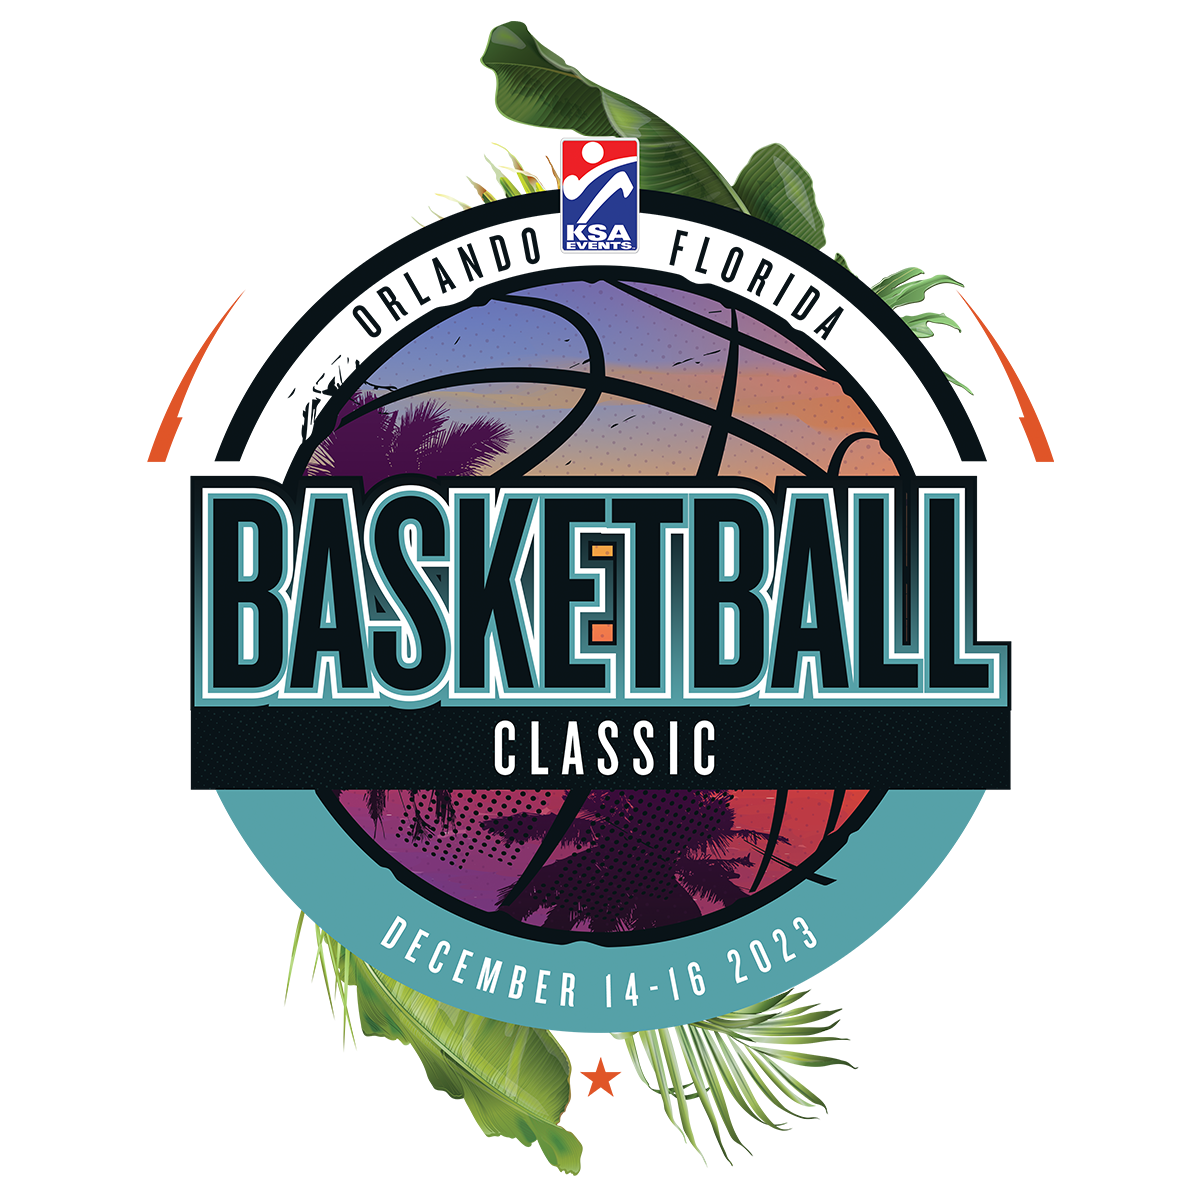 2023 Basketball Classic (Florida Resident) Passes